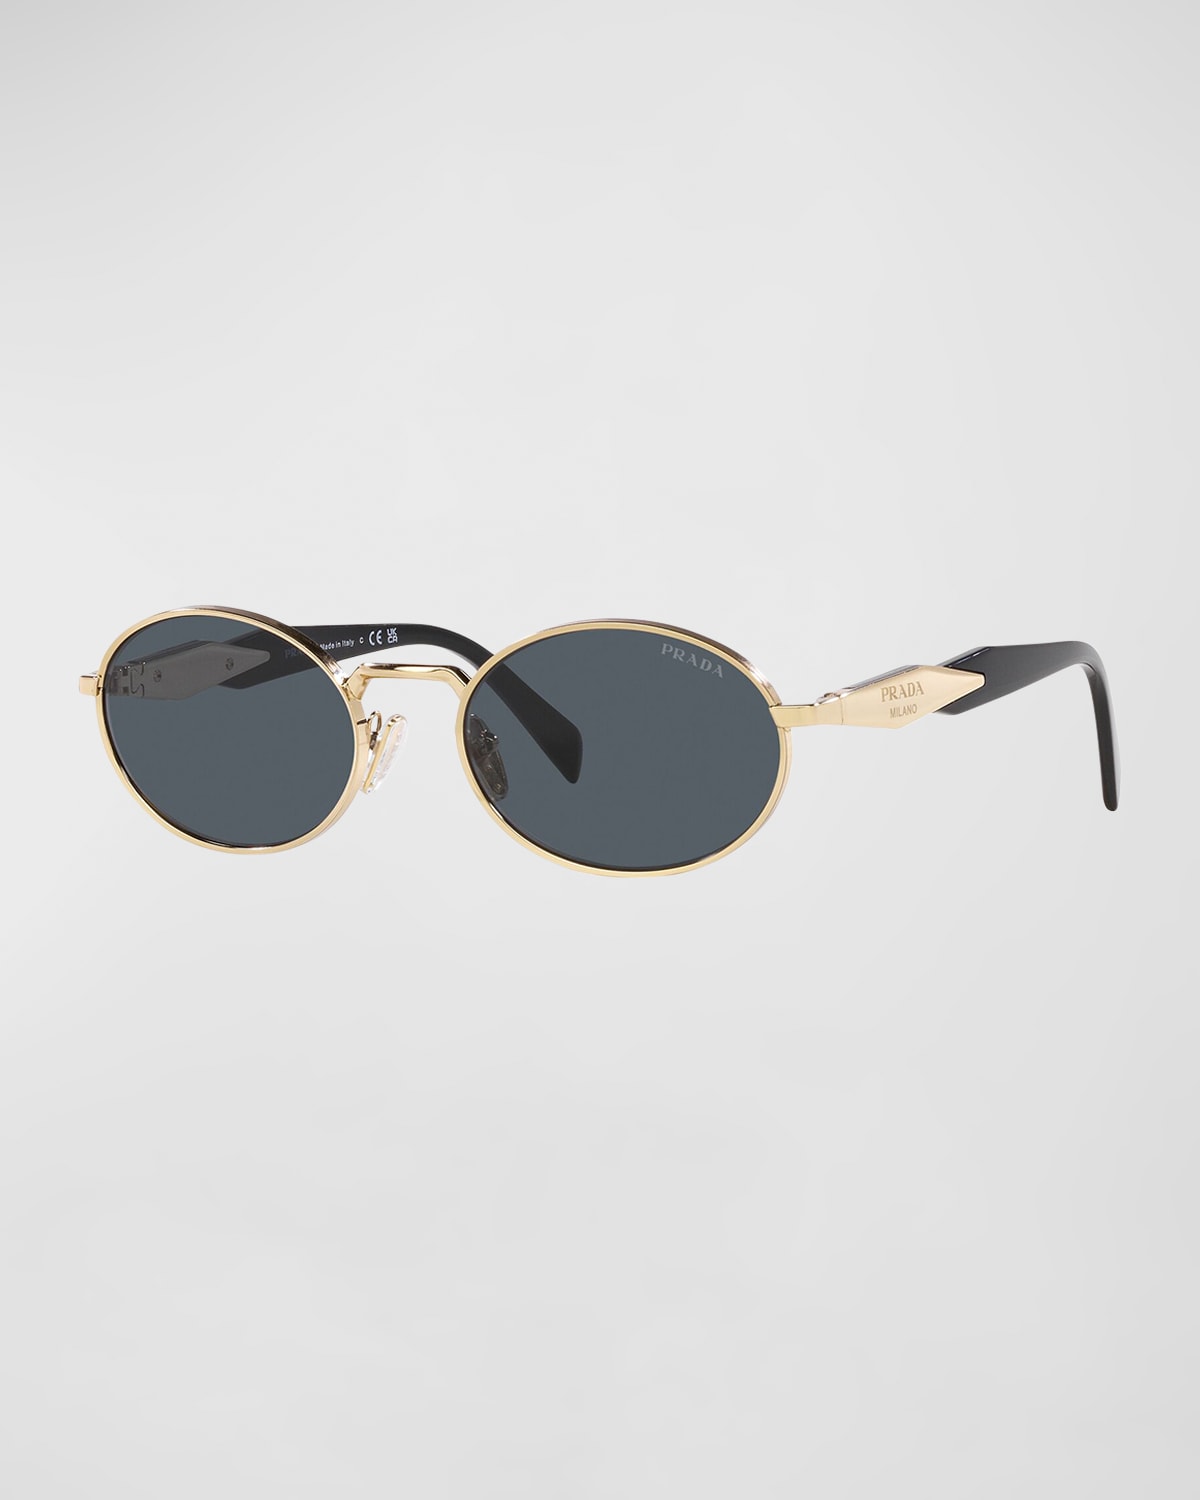 Designer Sunglasses - Prescription Eyeglasses - Ray-Ban, Prada, Silhouette,  OGI, Nike Eyewear